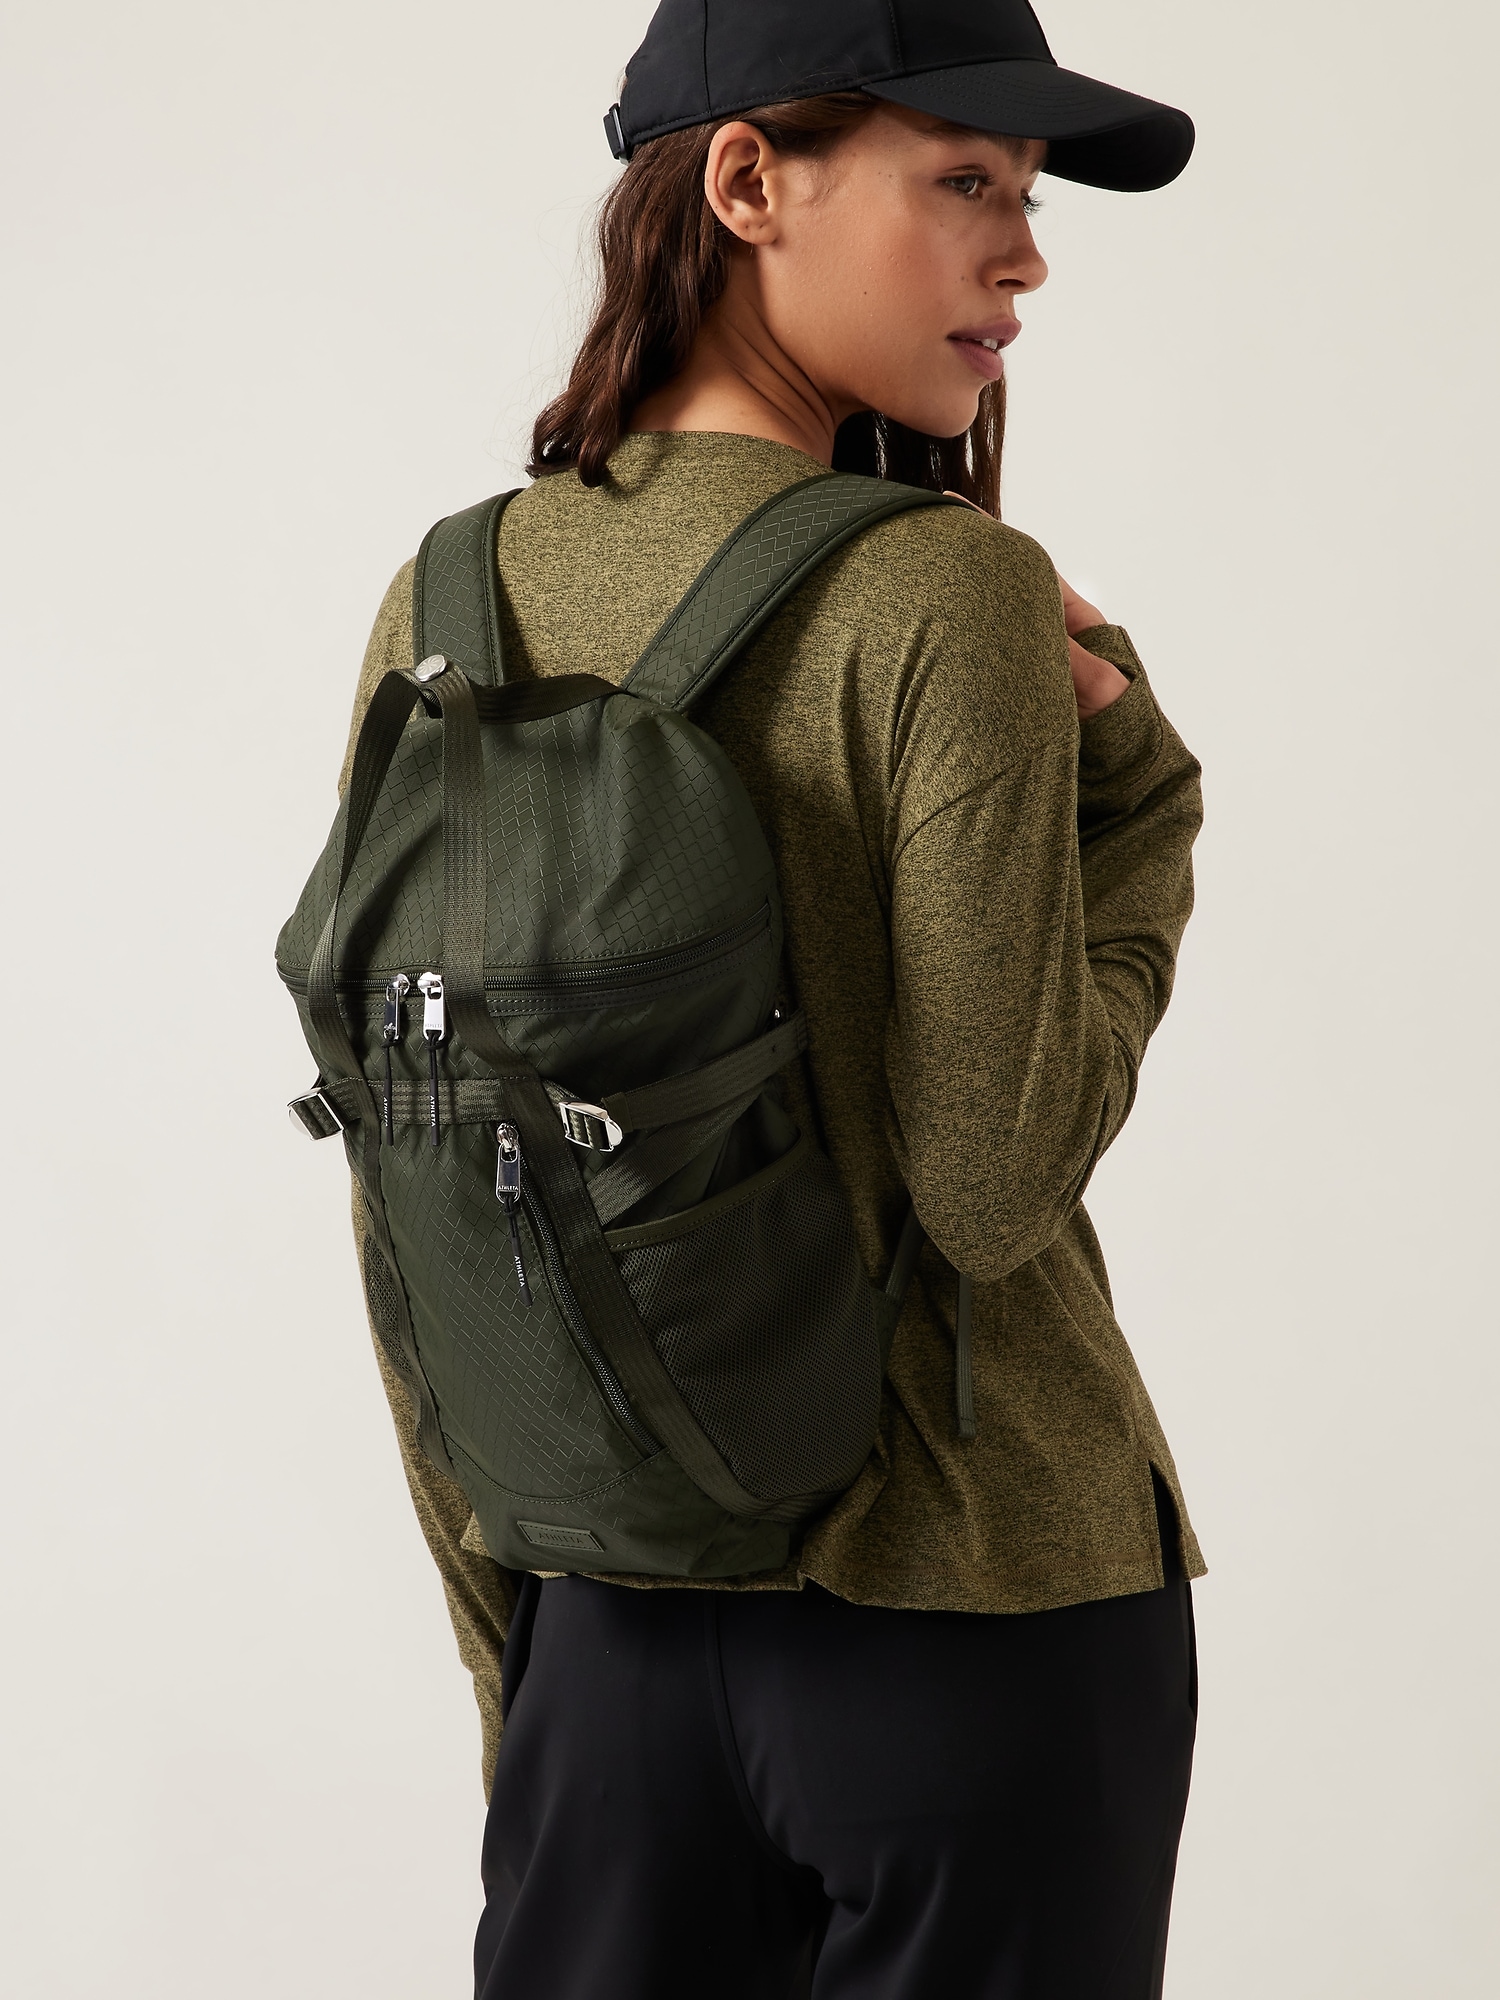 Athleta Excursion Backpack In Aspen Olive